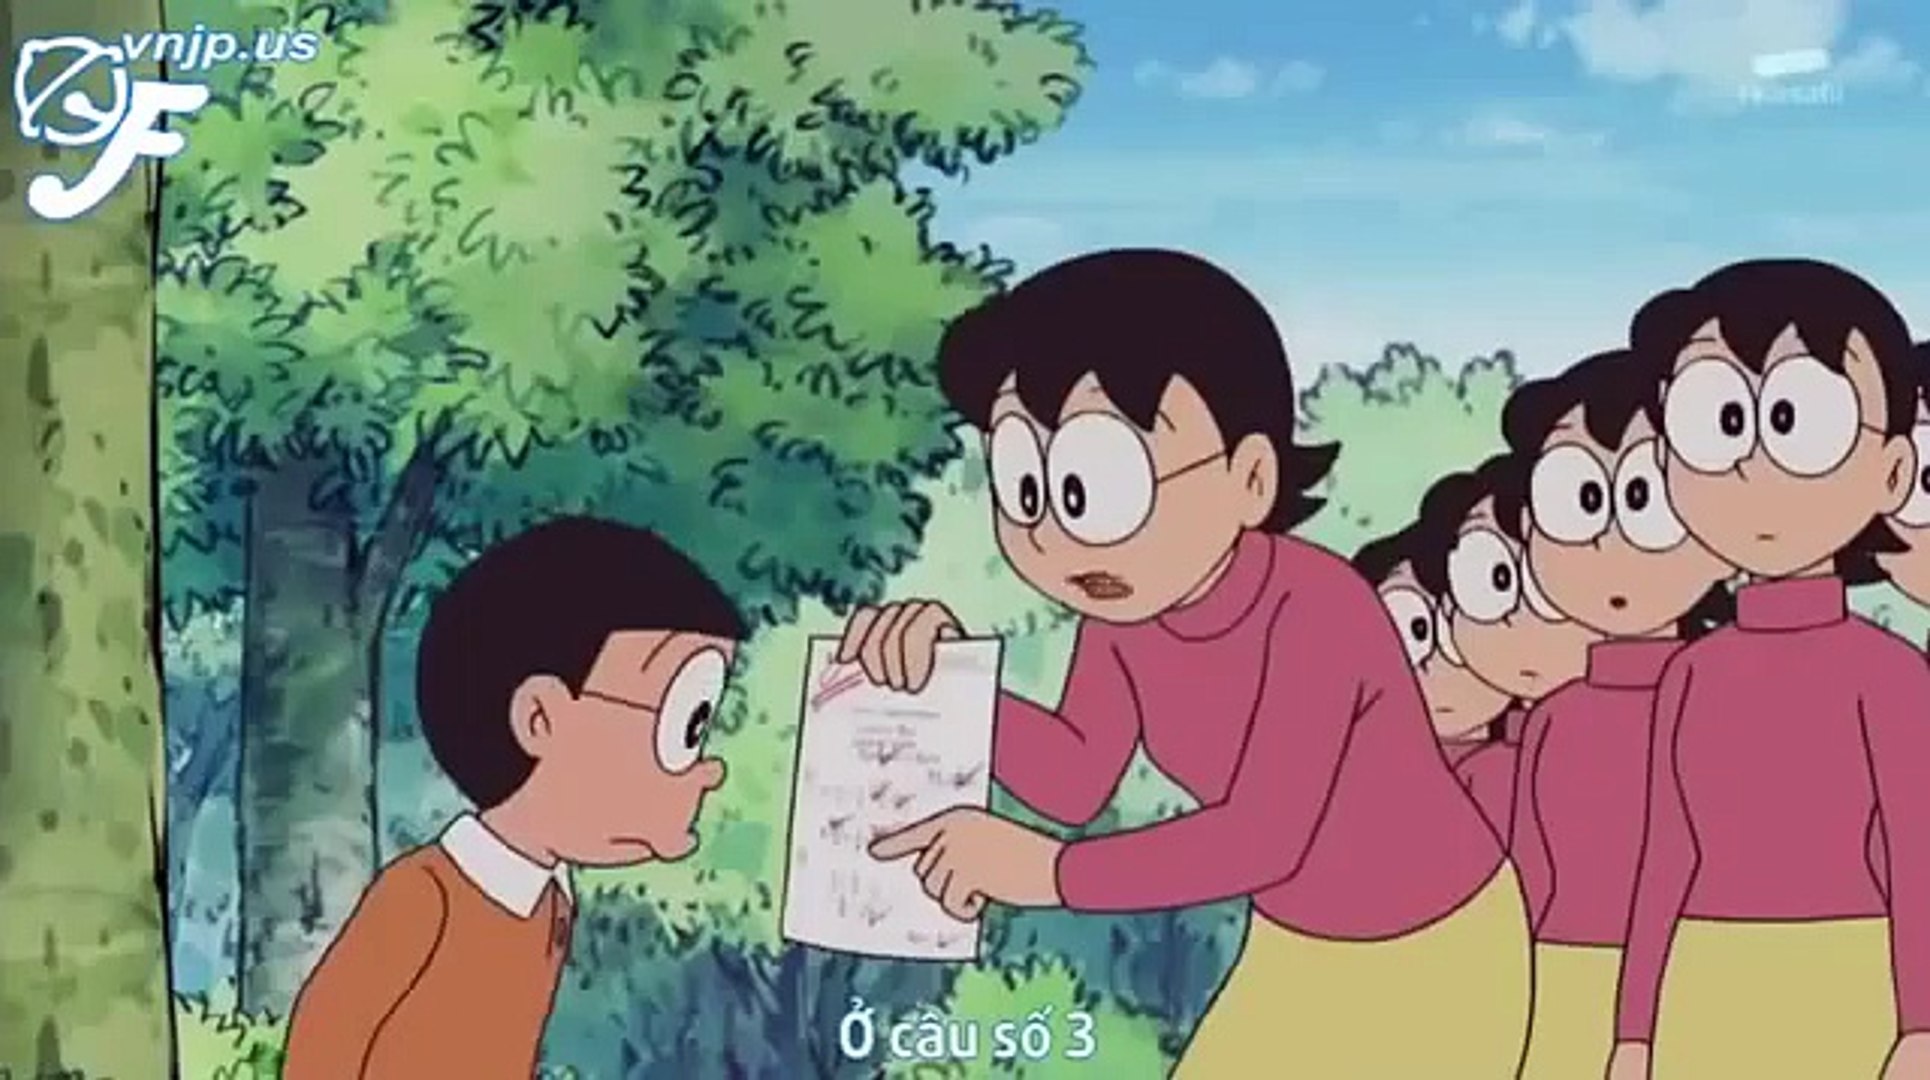 Doraemon Ep 270 ドラえもんアニメ 日本語 14 エピソード 270 Video Dailymotion